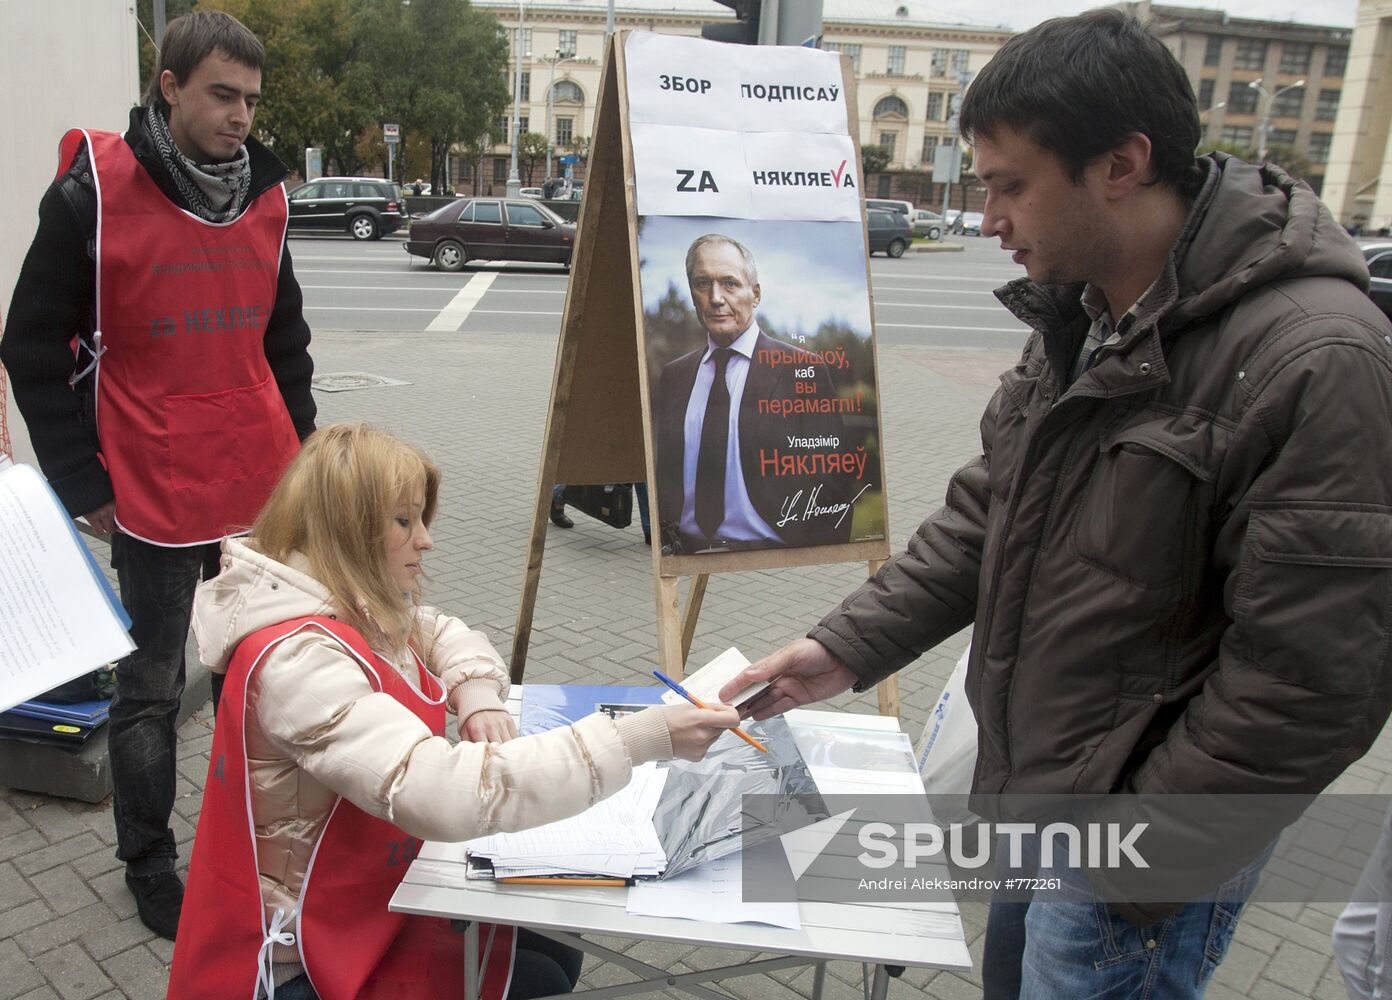 Collecting signatures for Vladimir Neklaev